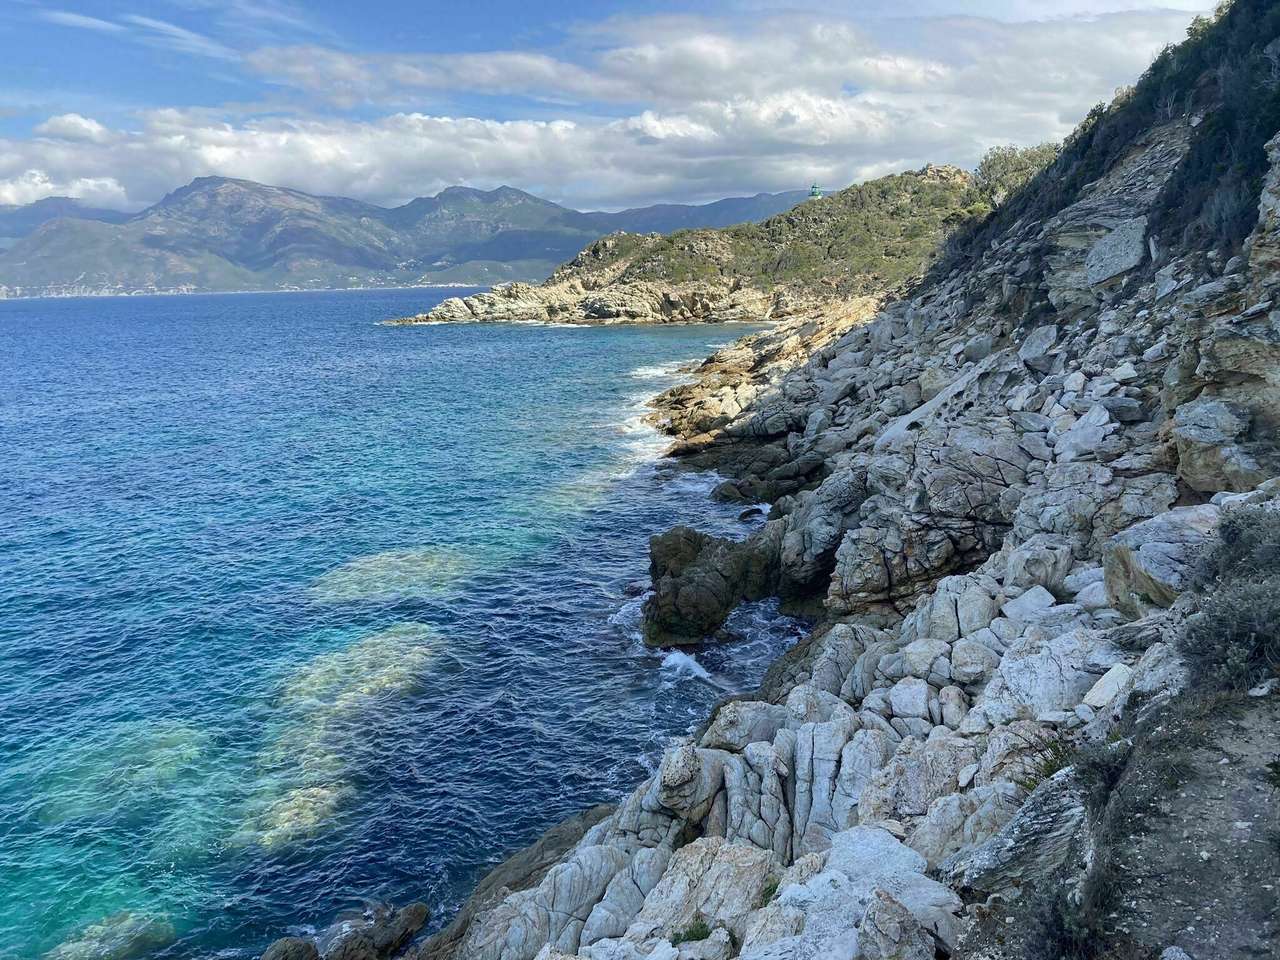 Nadmorski krajobraz Korsyki puzzle online